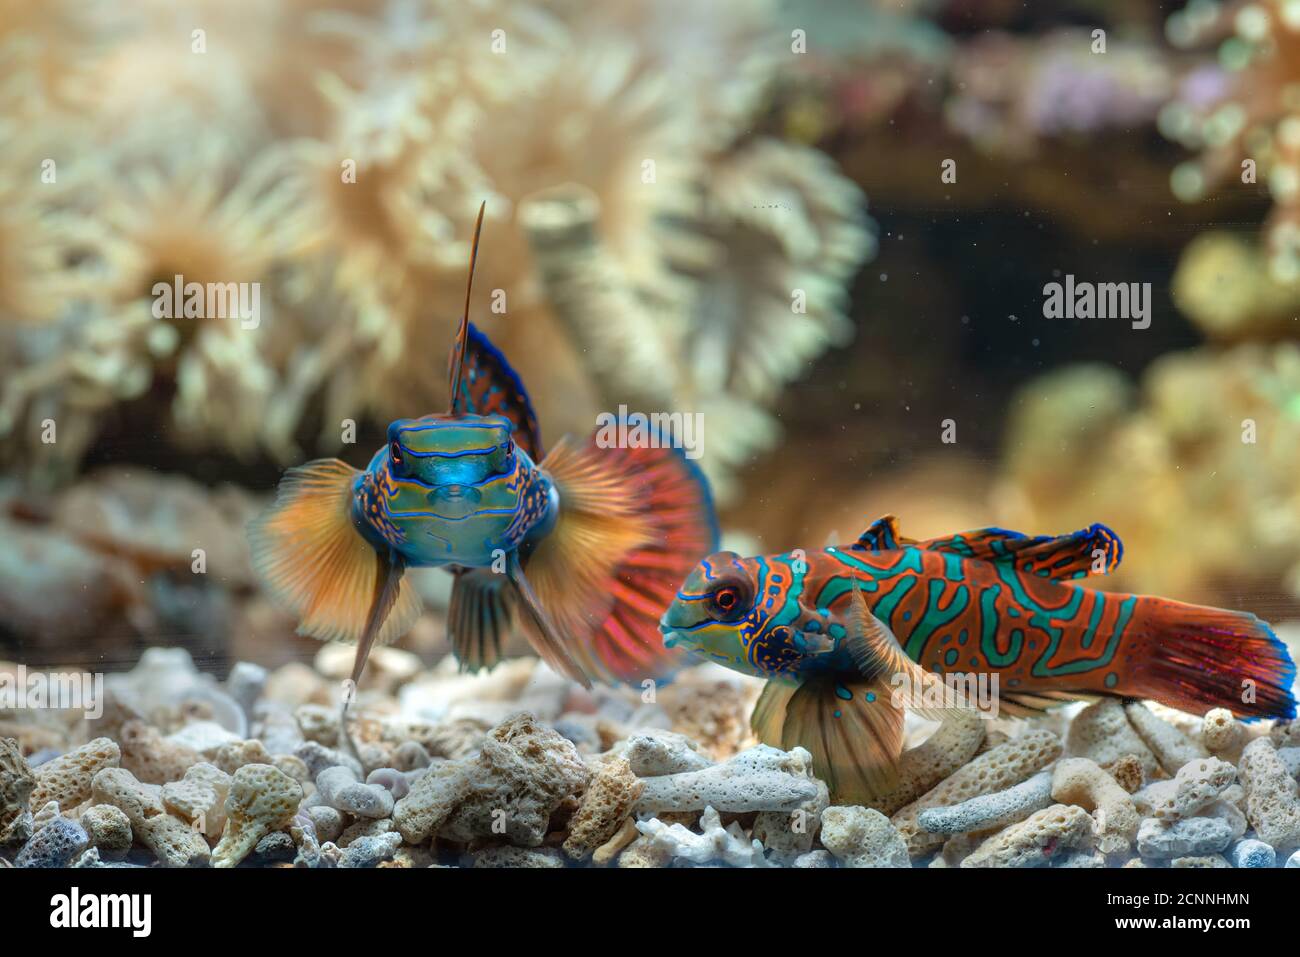 Two mandarinfish in an aquarium, Indonesia Stock Photo